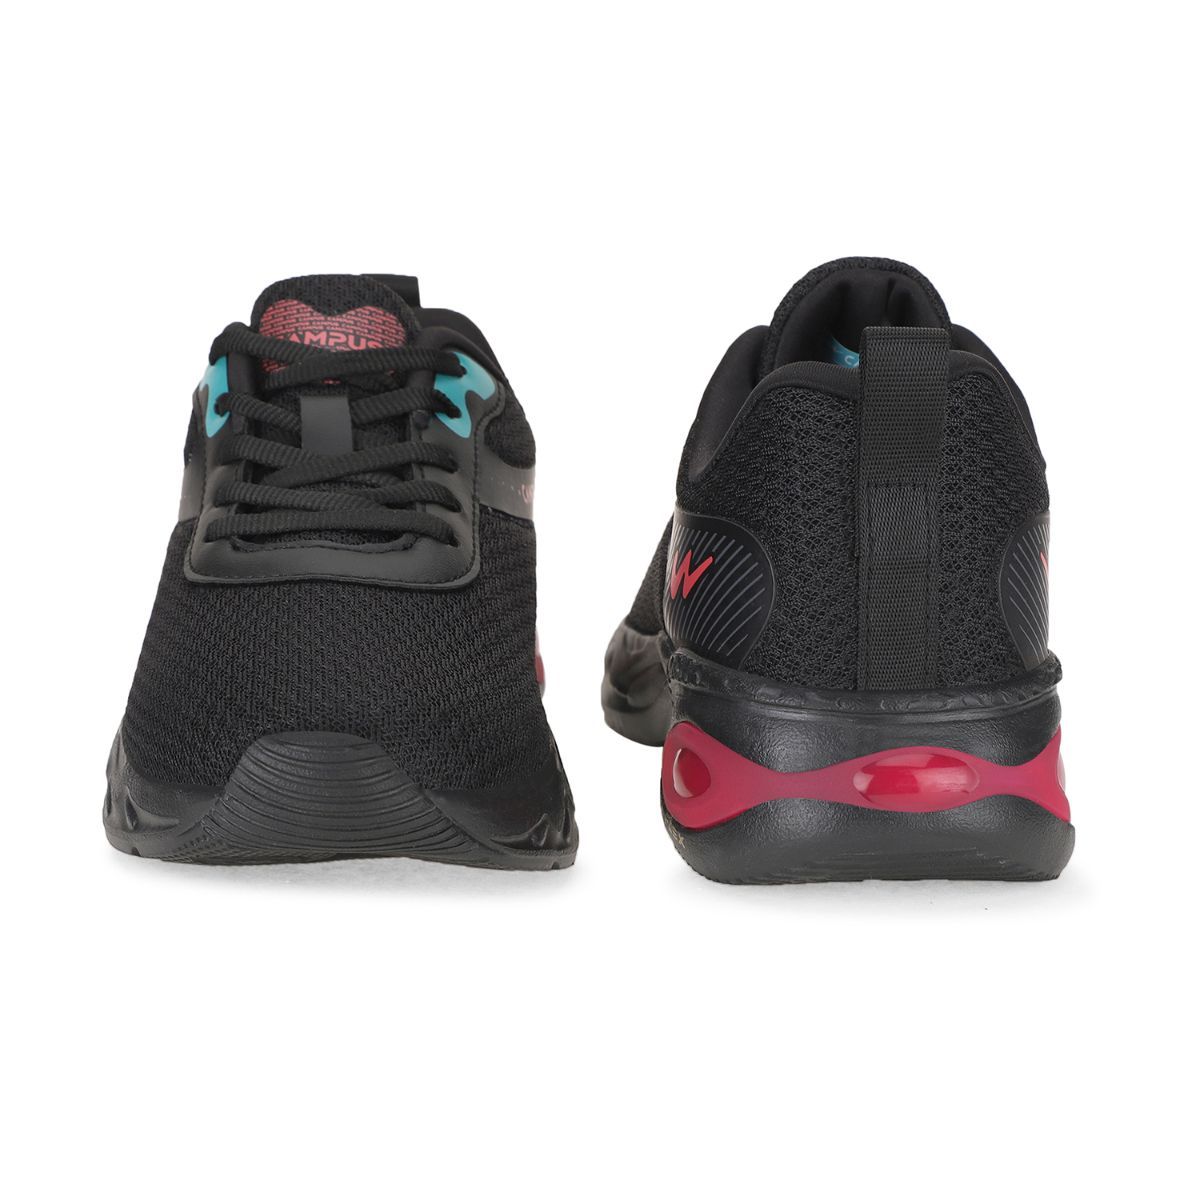 BZees Black Flicker Sneaker Shoe - 10 Wide | Shoes sneakers, Shoes, Work  shoes